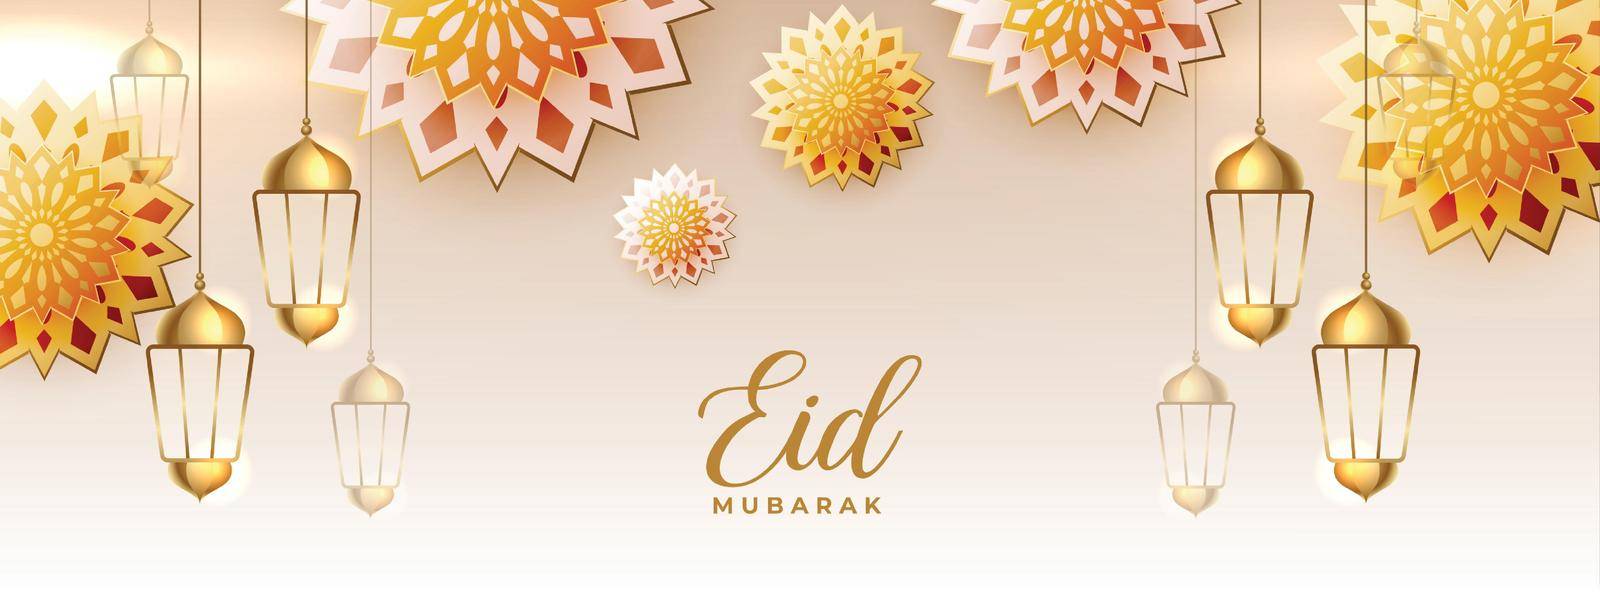 realistic eid mubarak festival banner with hanging lanterns